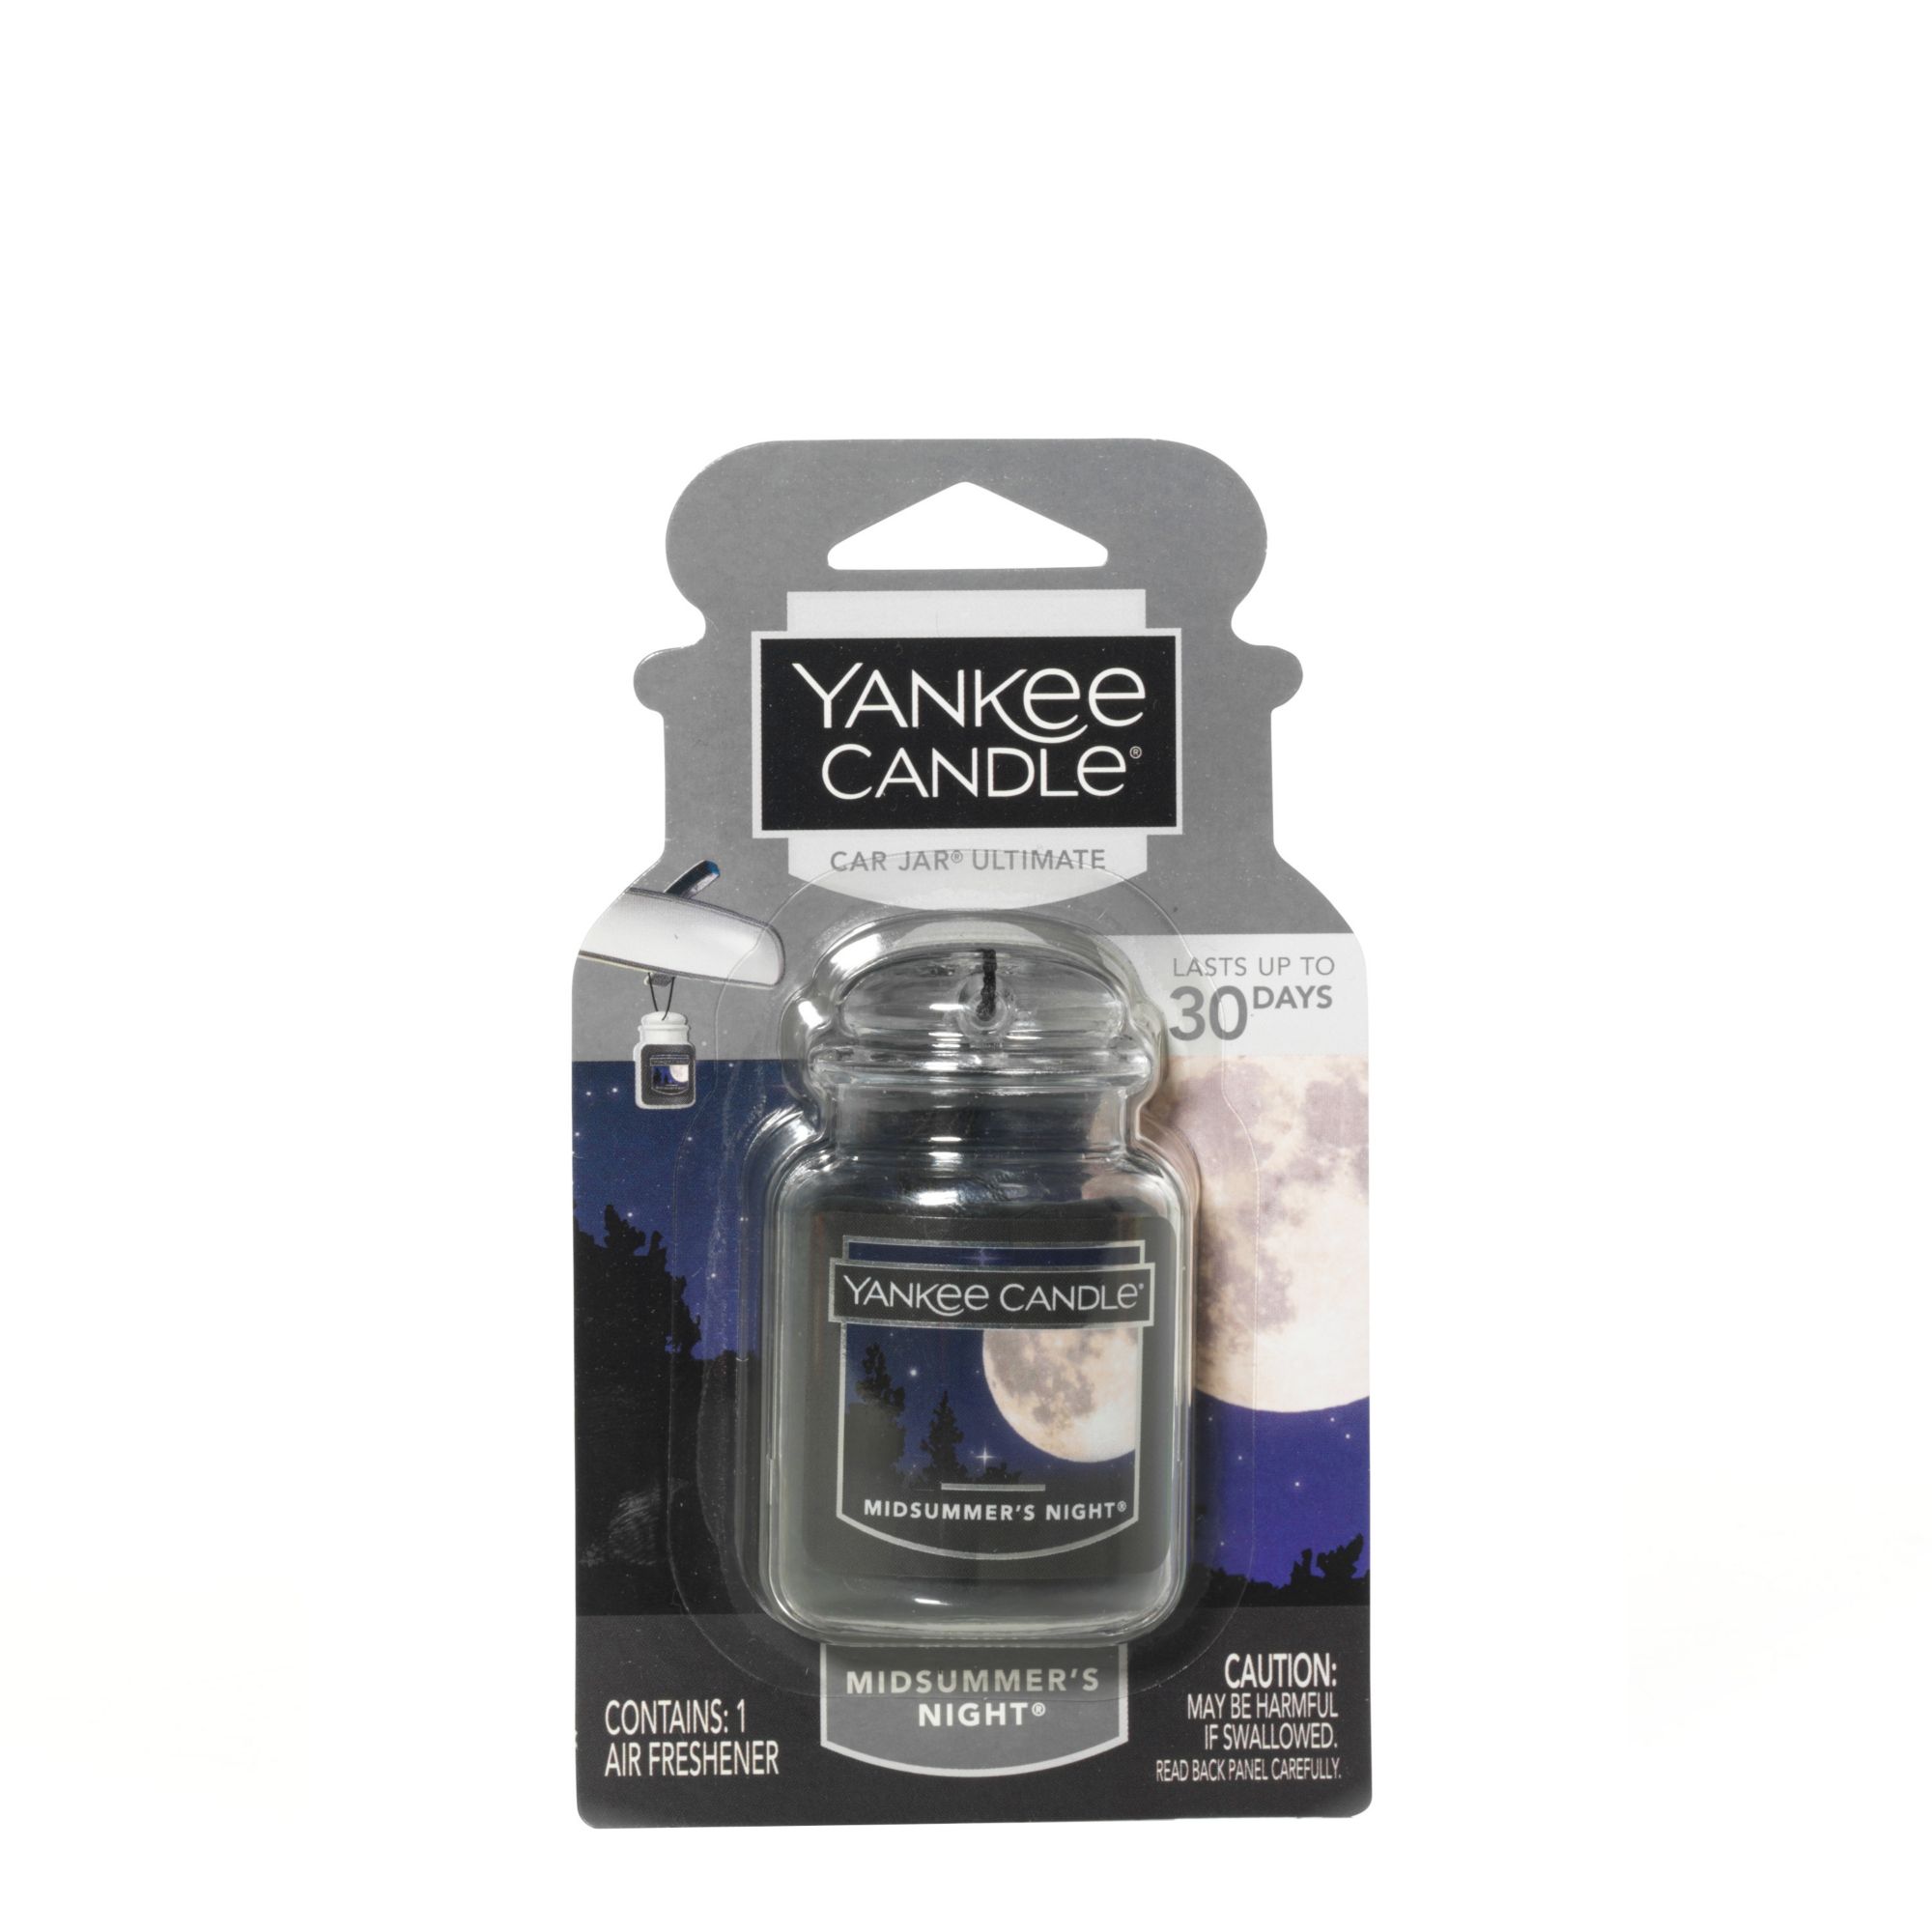 Yankee Candle Car Jar Ultimate - Midsummer's Night